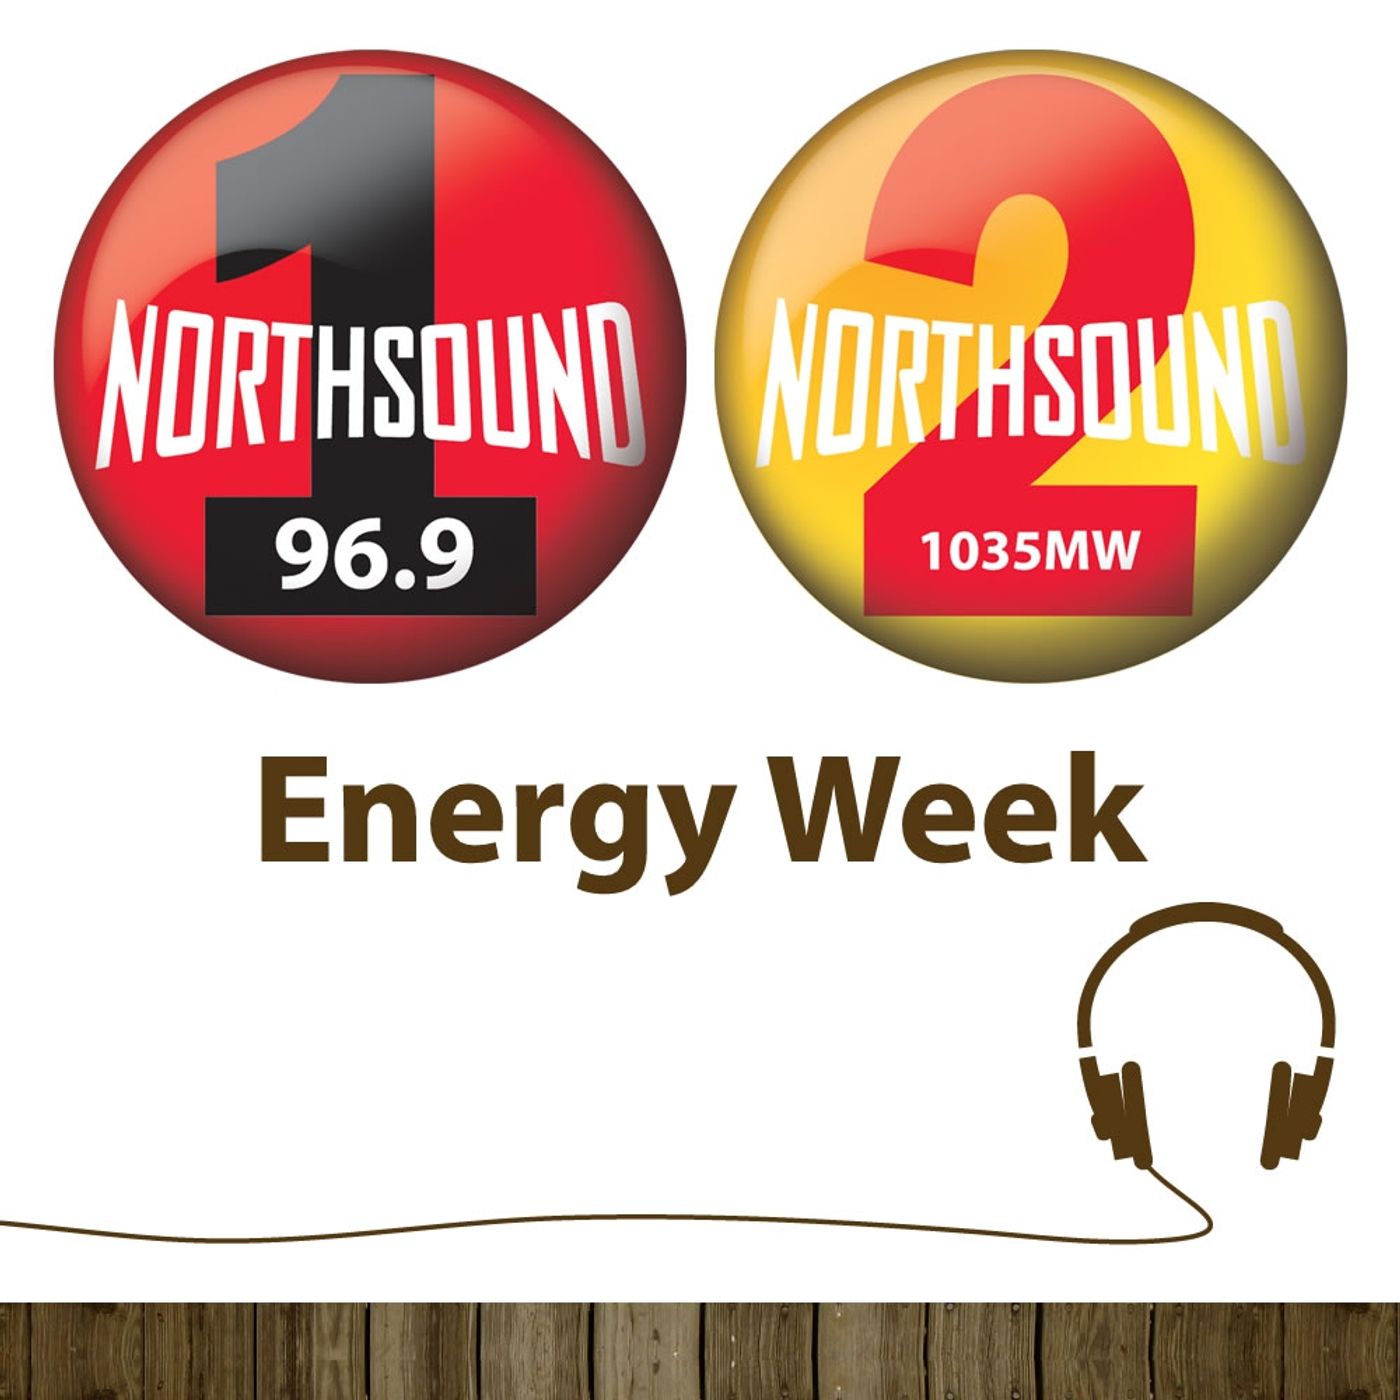 Northsound Energy Week 17/1/14